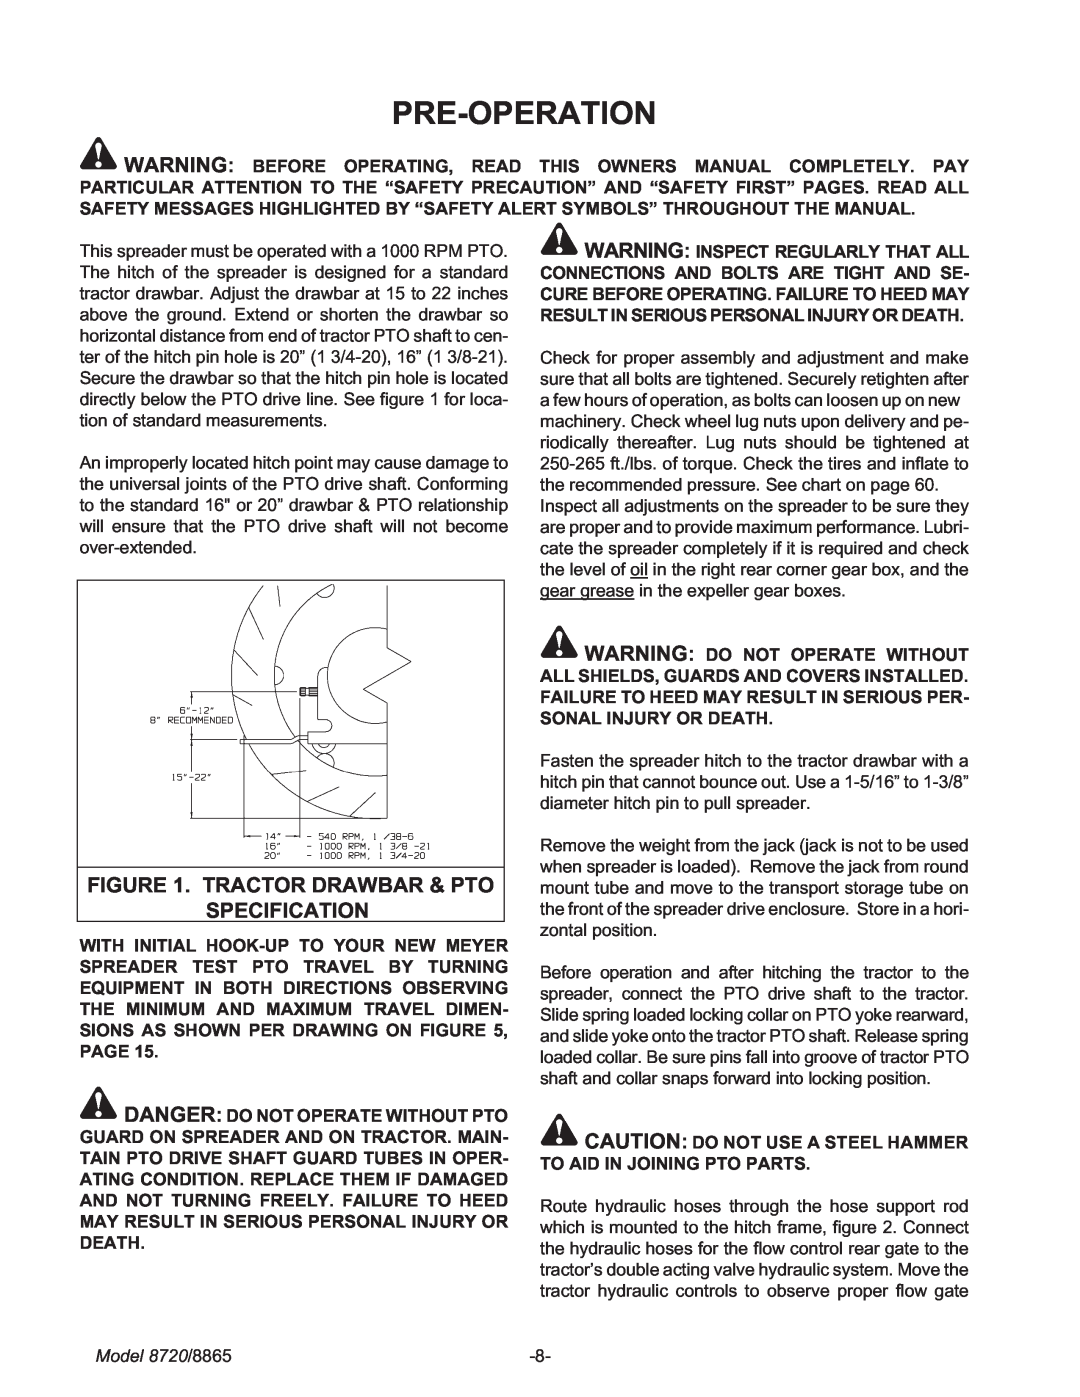 Meyer manual Pre-Operation, Tractor Drawbar & Pto Specification, Model 8720/8865 